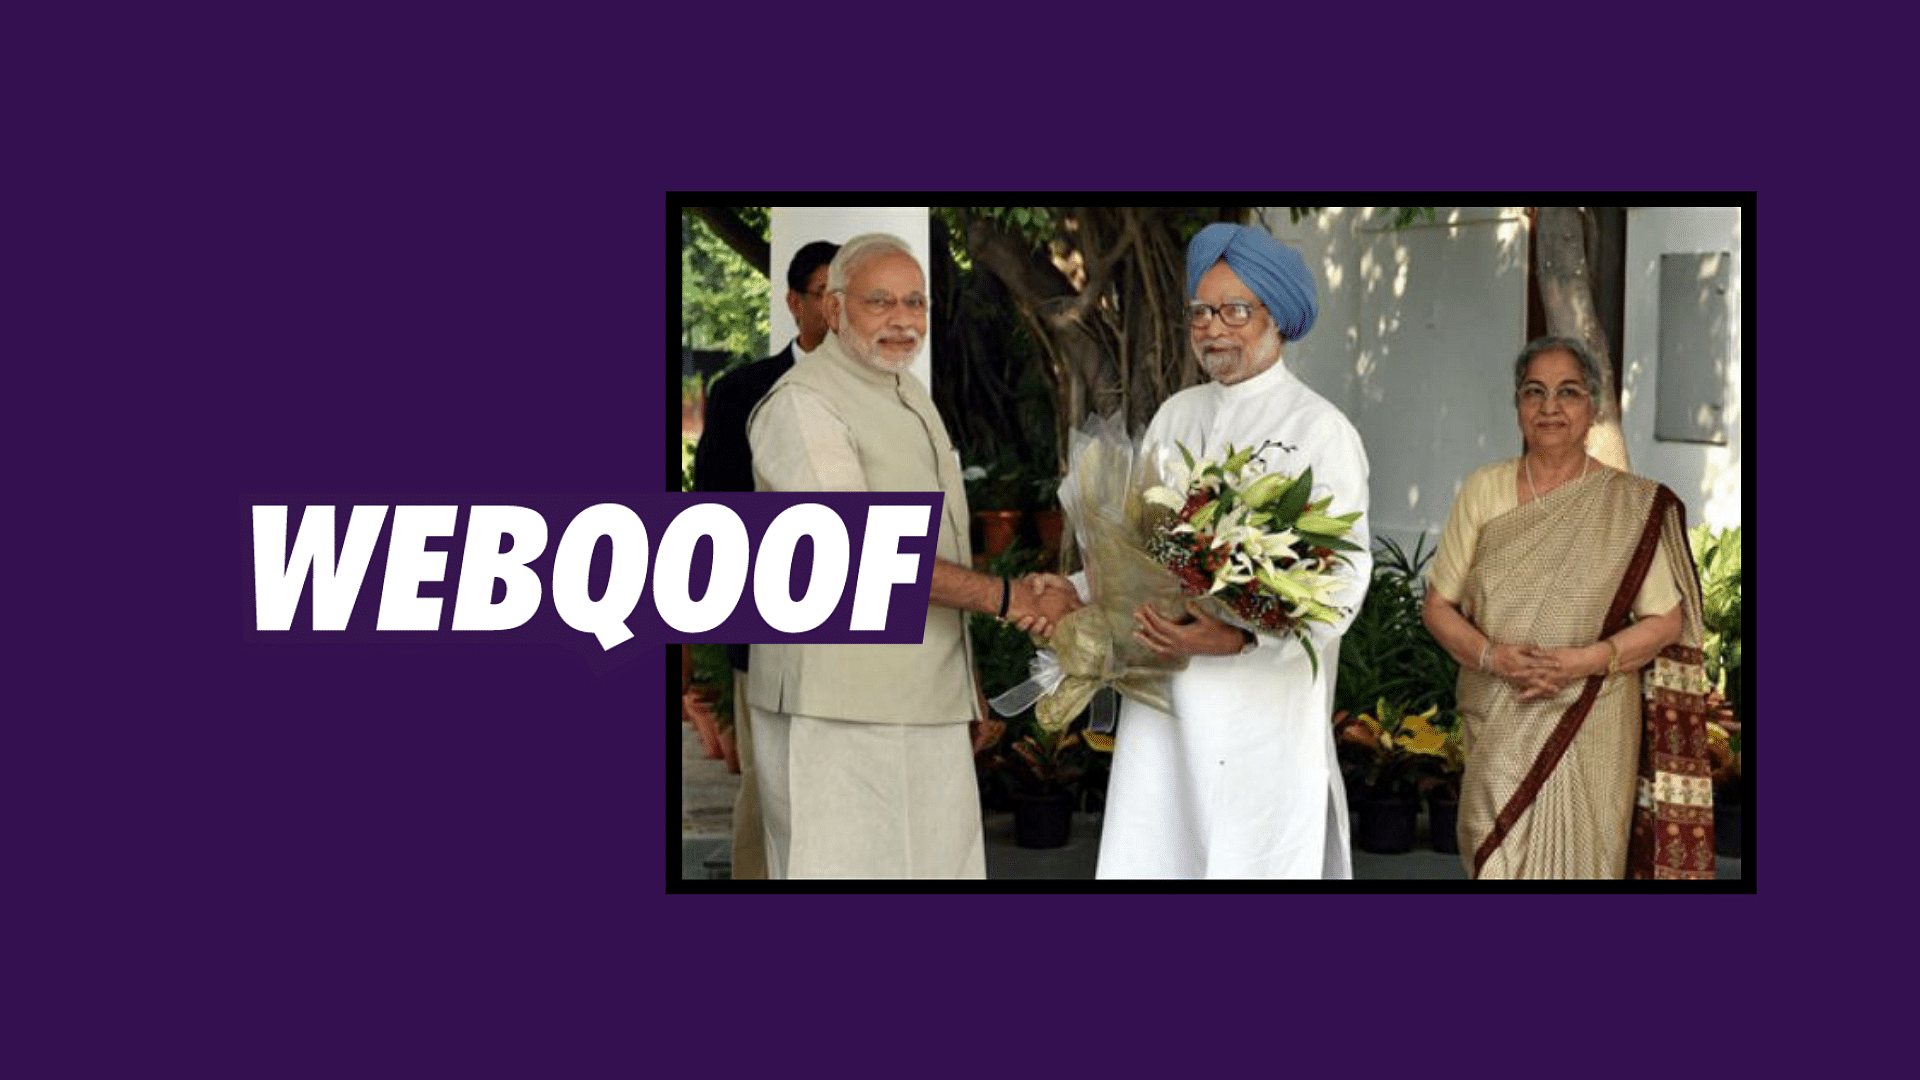 File photo of Prime Minister Narendra Modi meeting his predecessor Manmohan Singh in 2014.